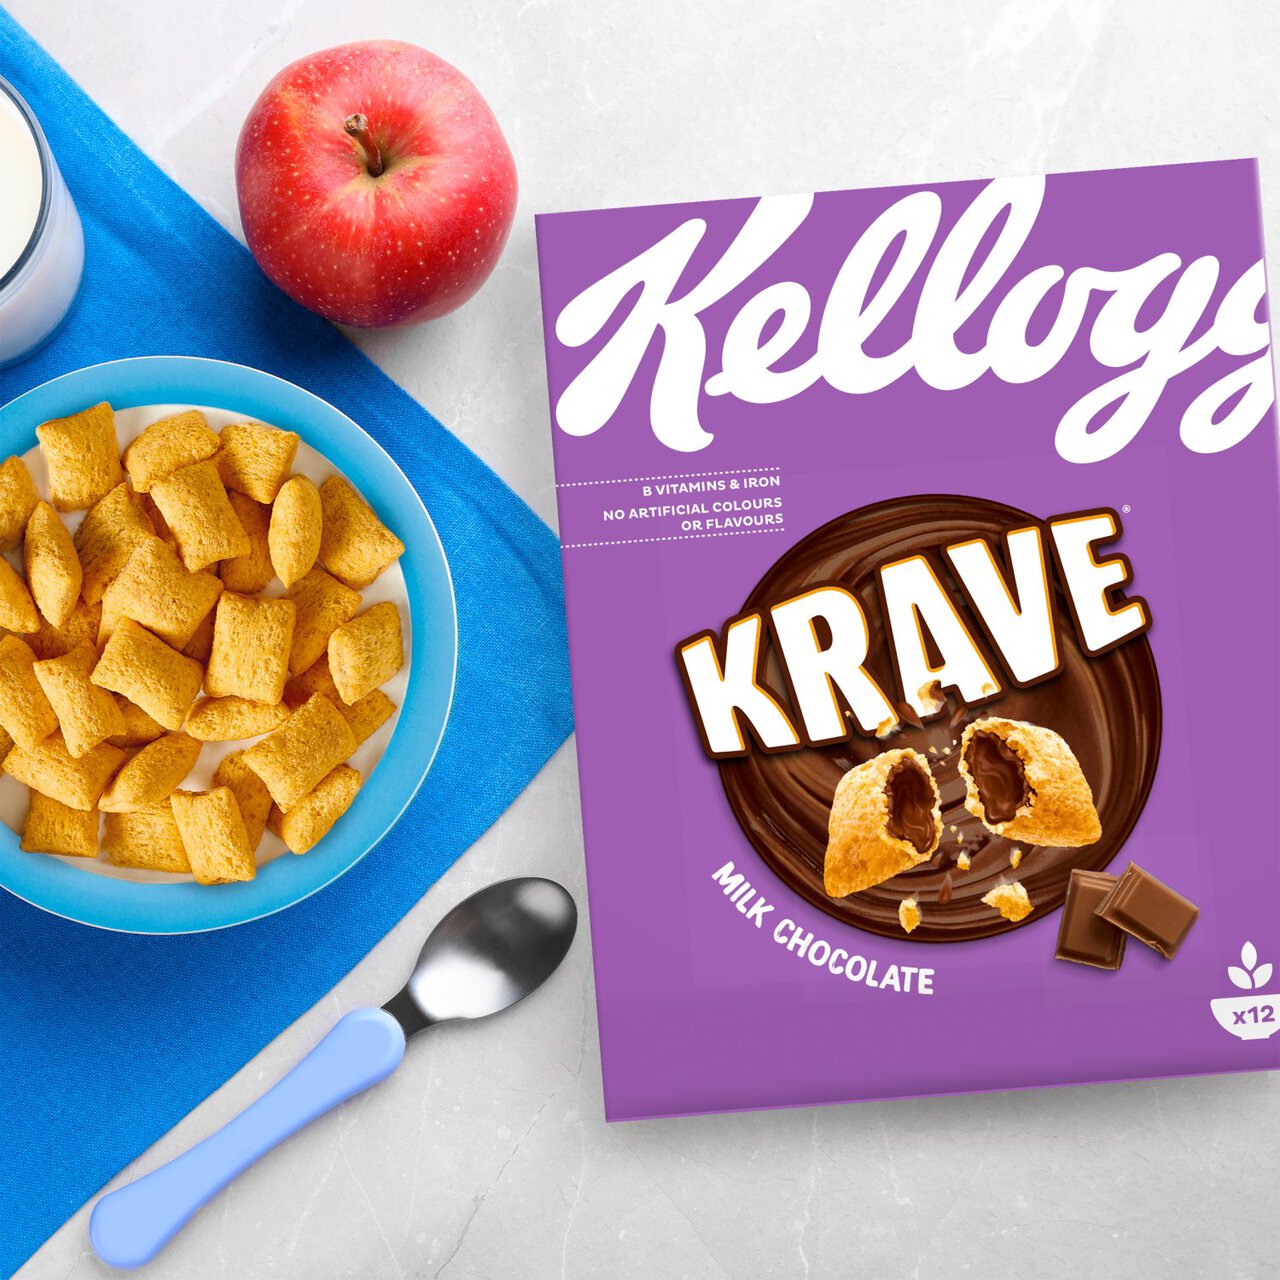 Kellogg's Krave Milk Chocolate 410g